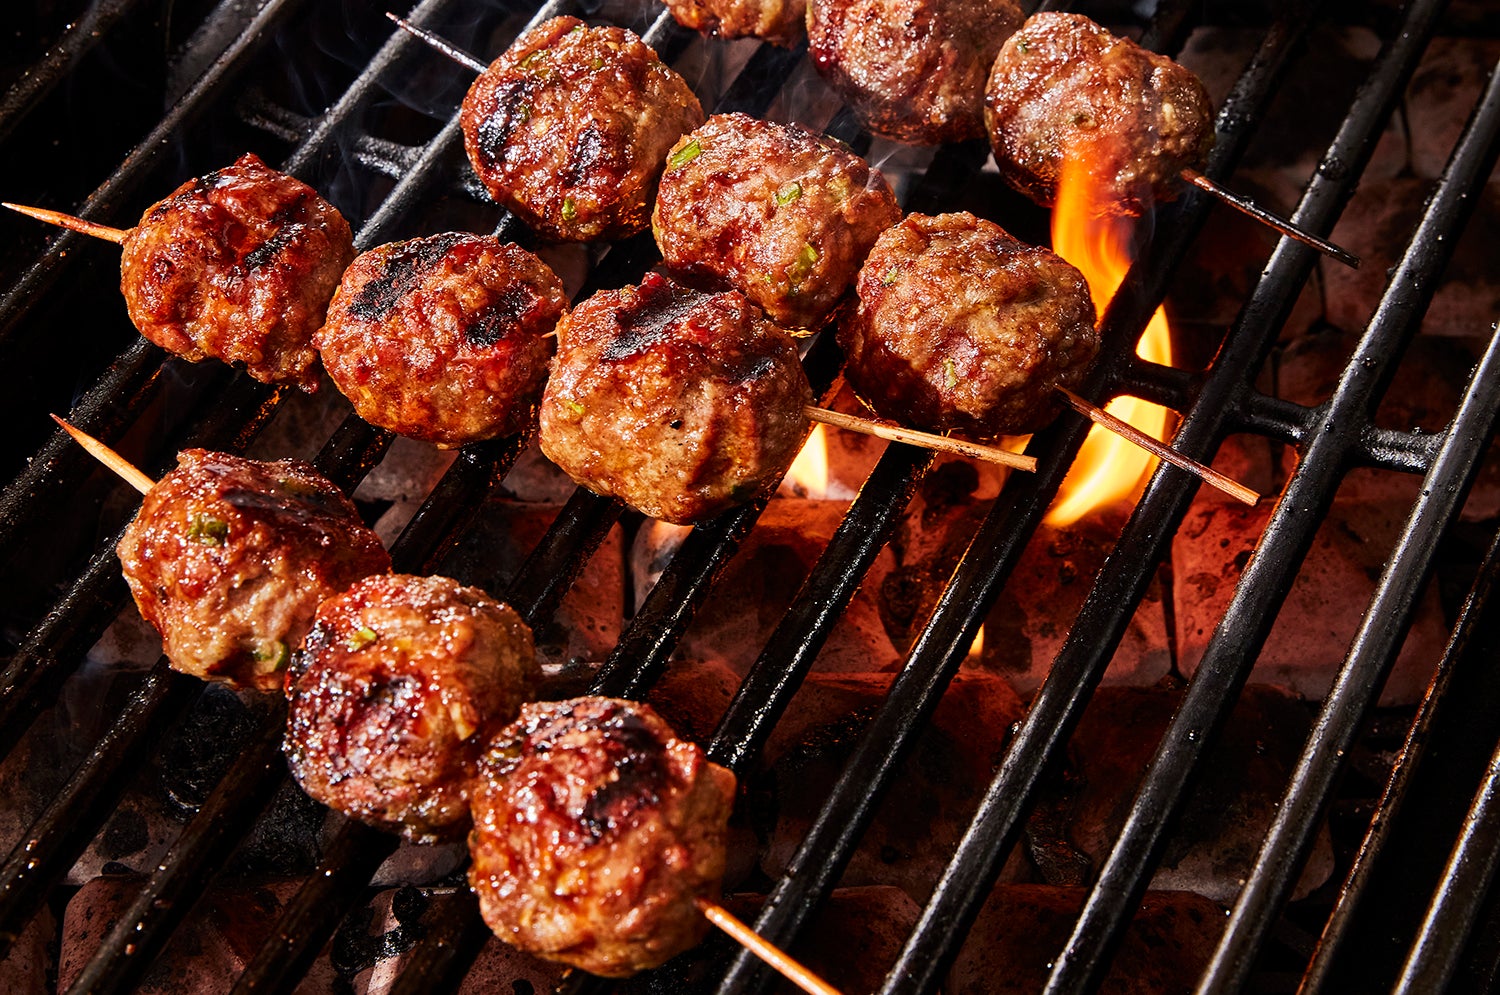 barbecuing meatballs on skewers